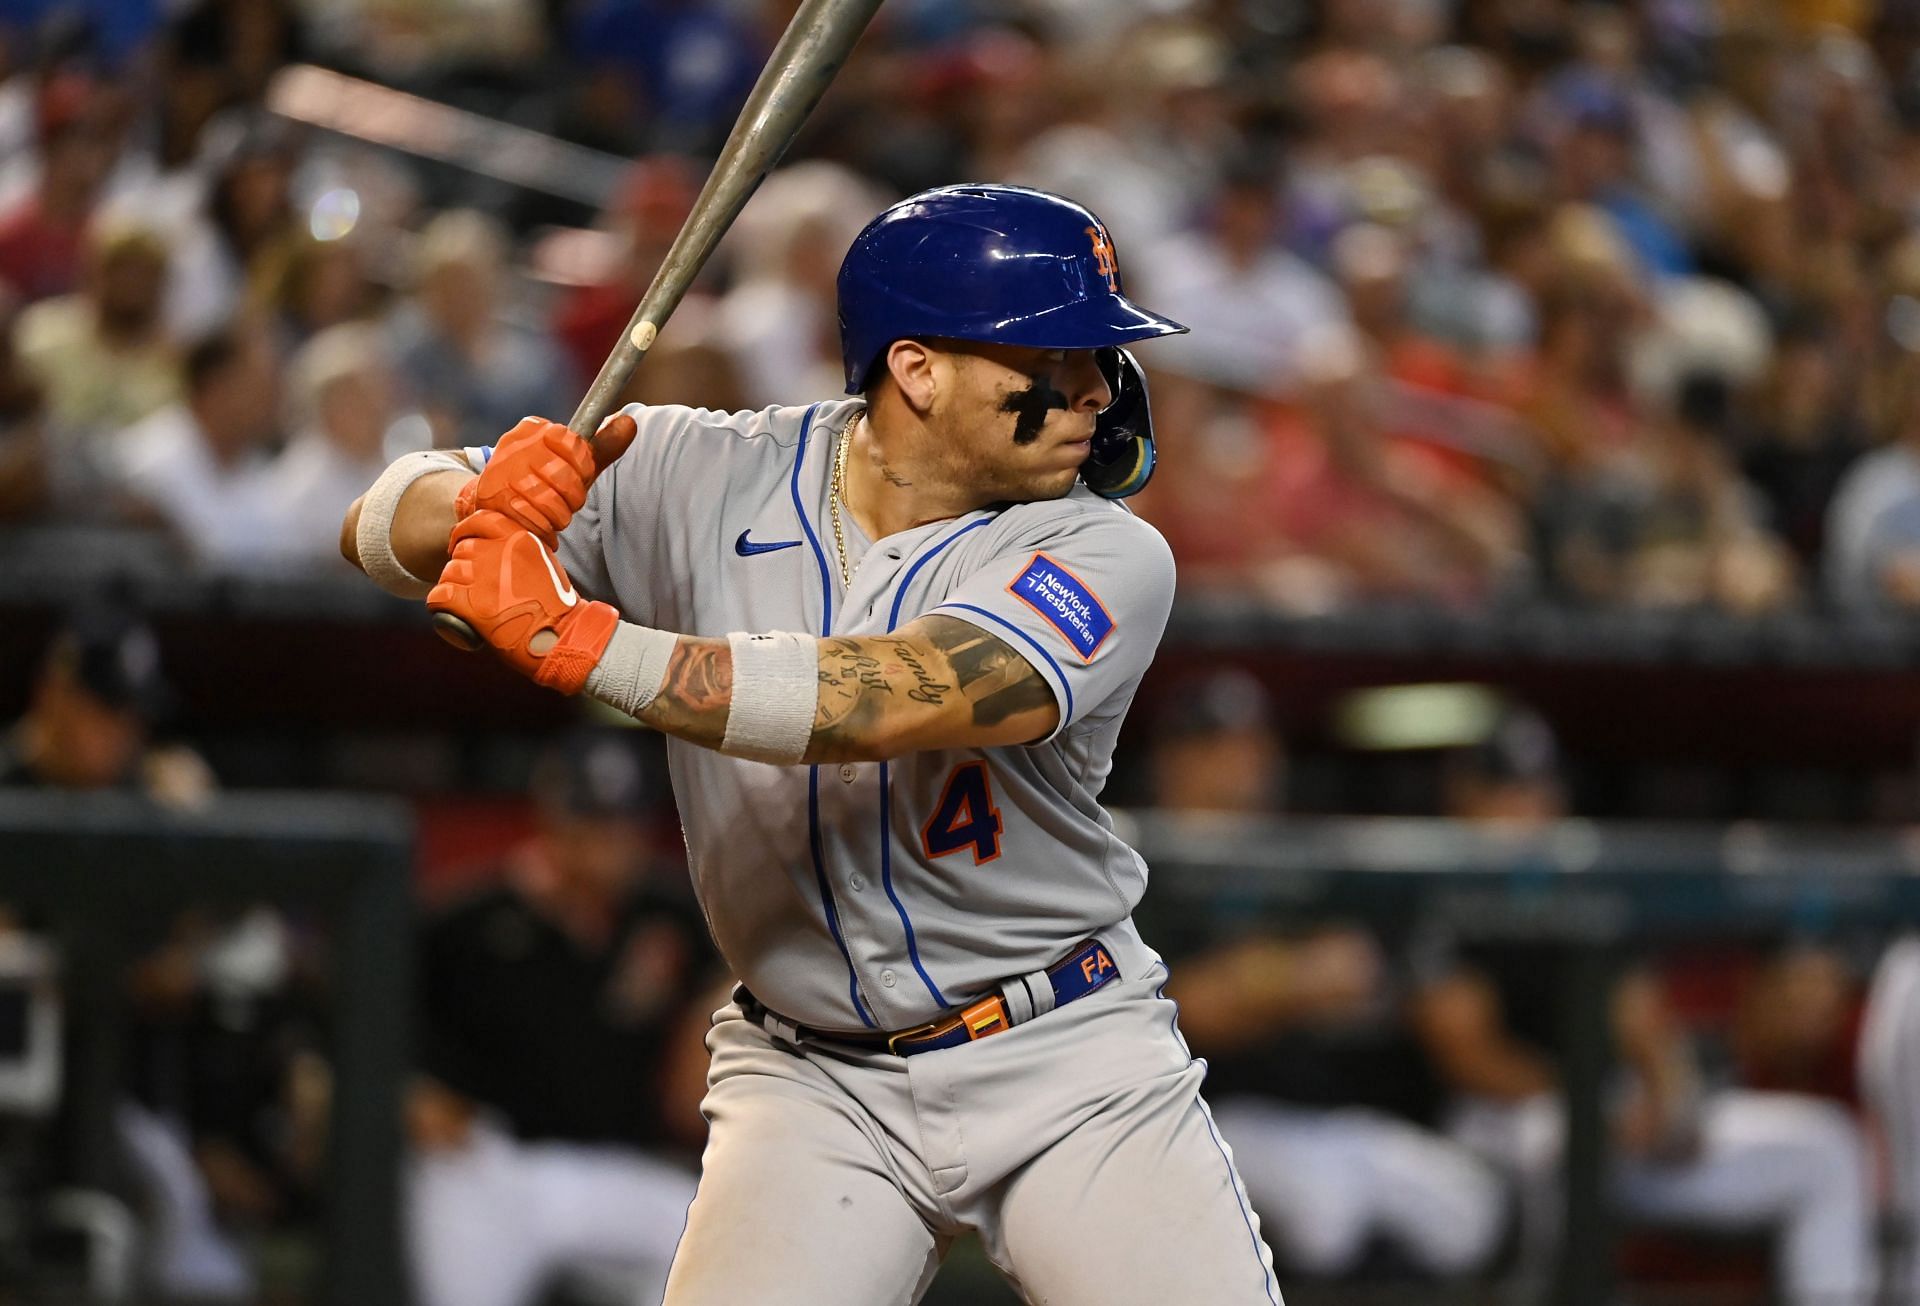 Francisco Alvarez to represent Mets at All-Star Futures Game